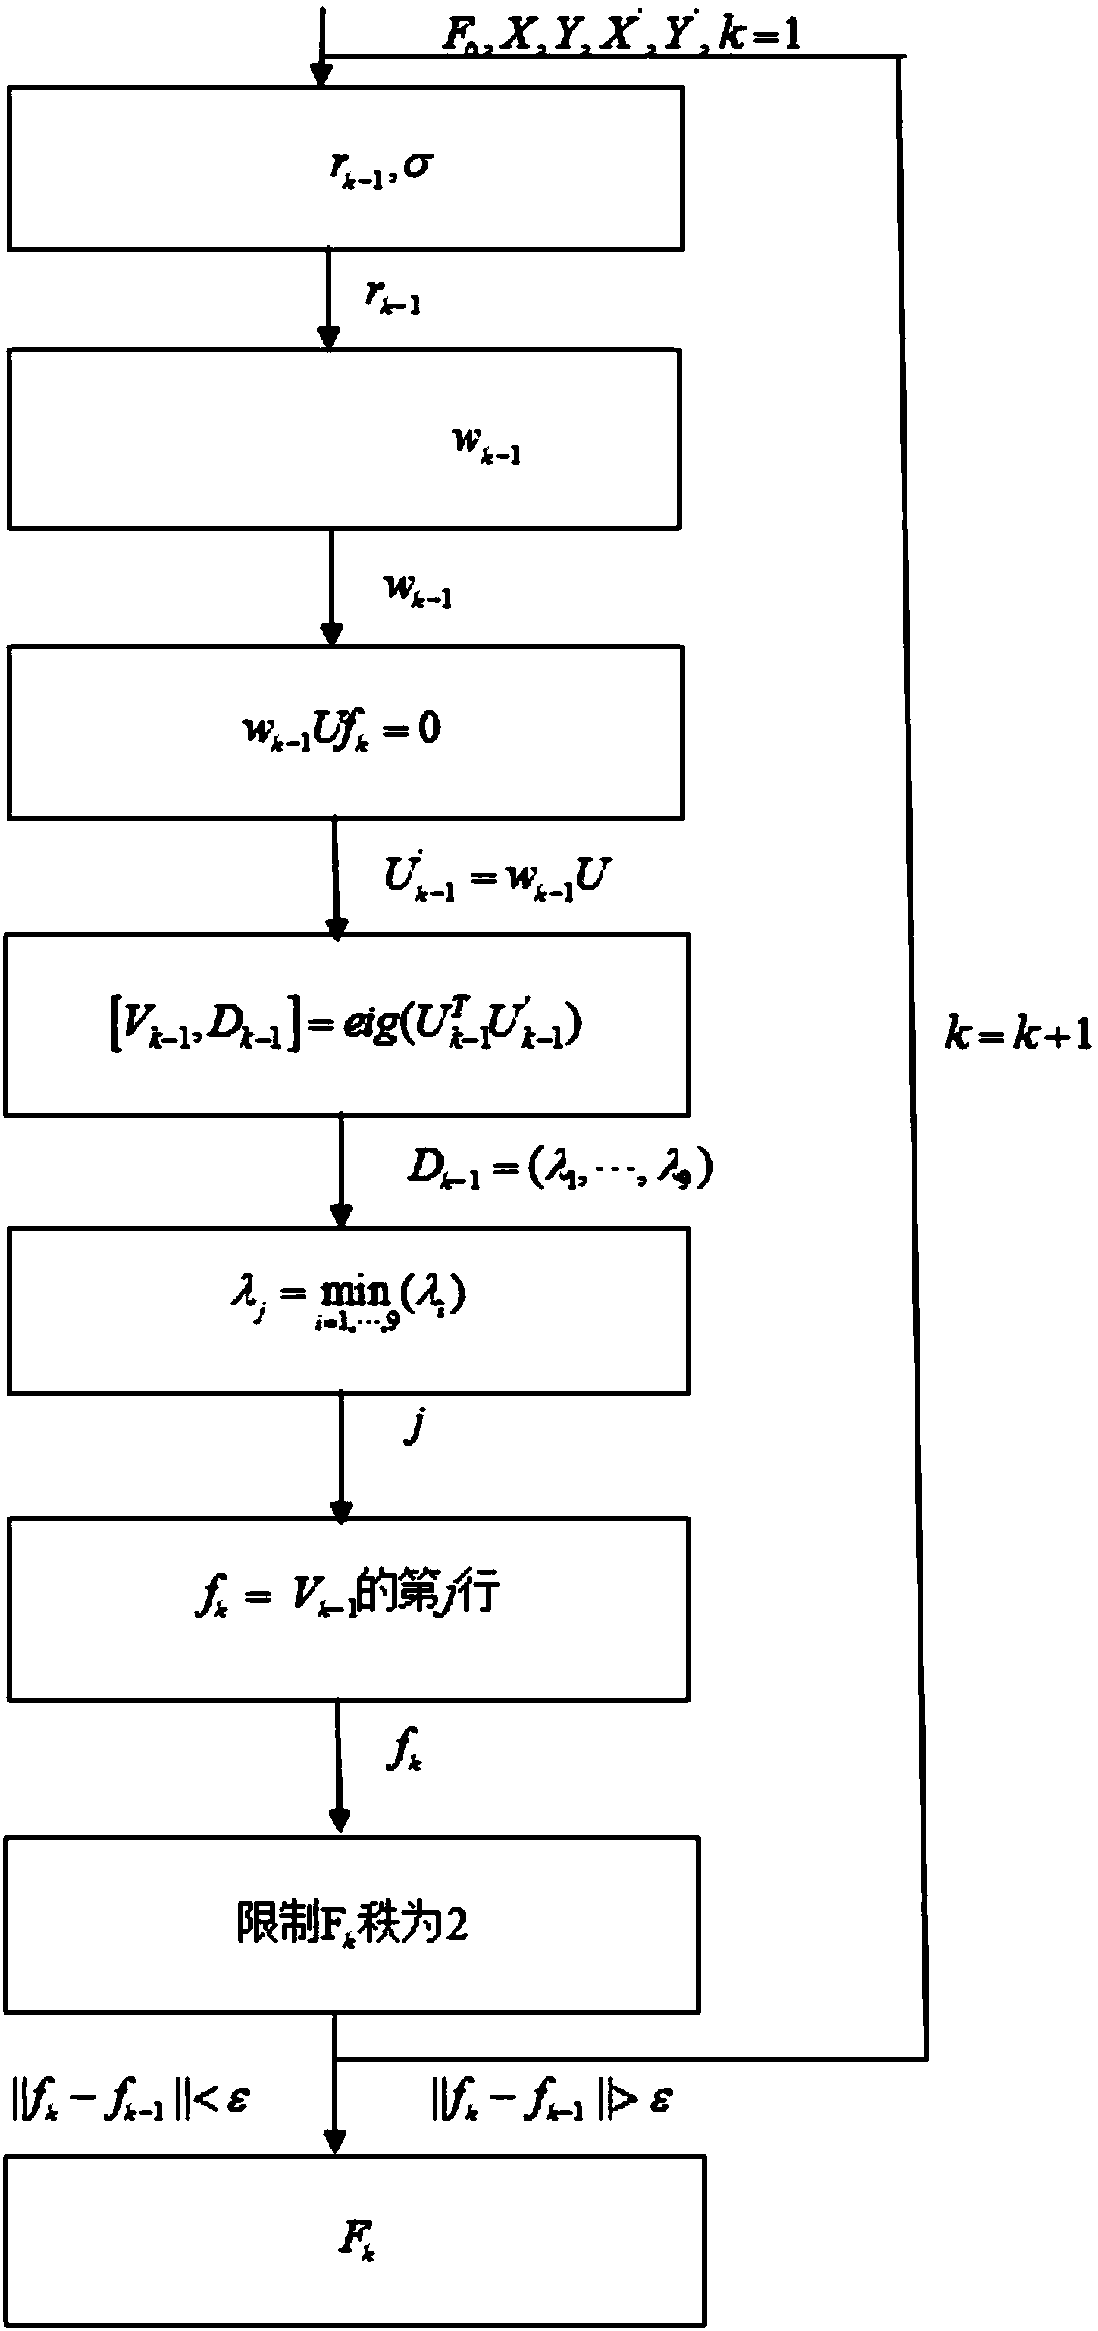 Related entropy-based Torr-M-Estimators basic matrix robust estimation method